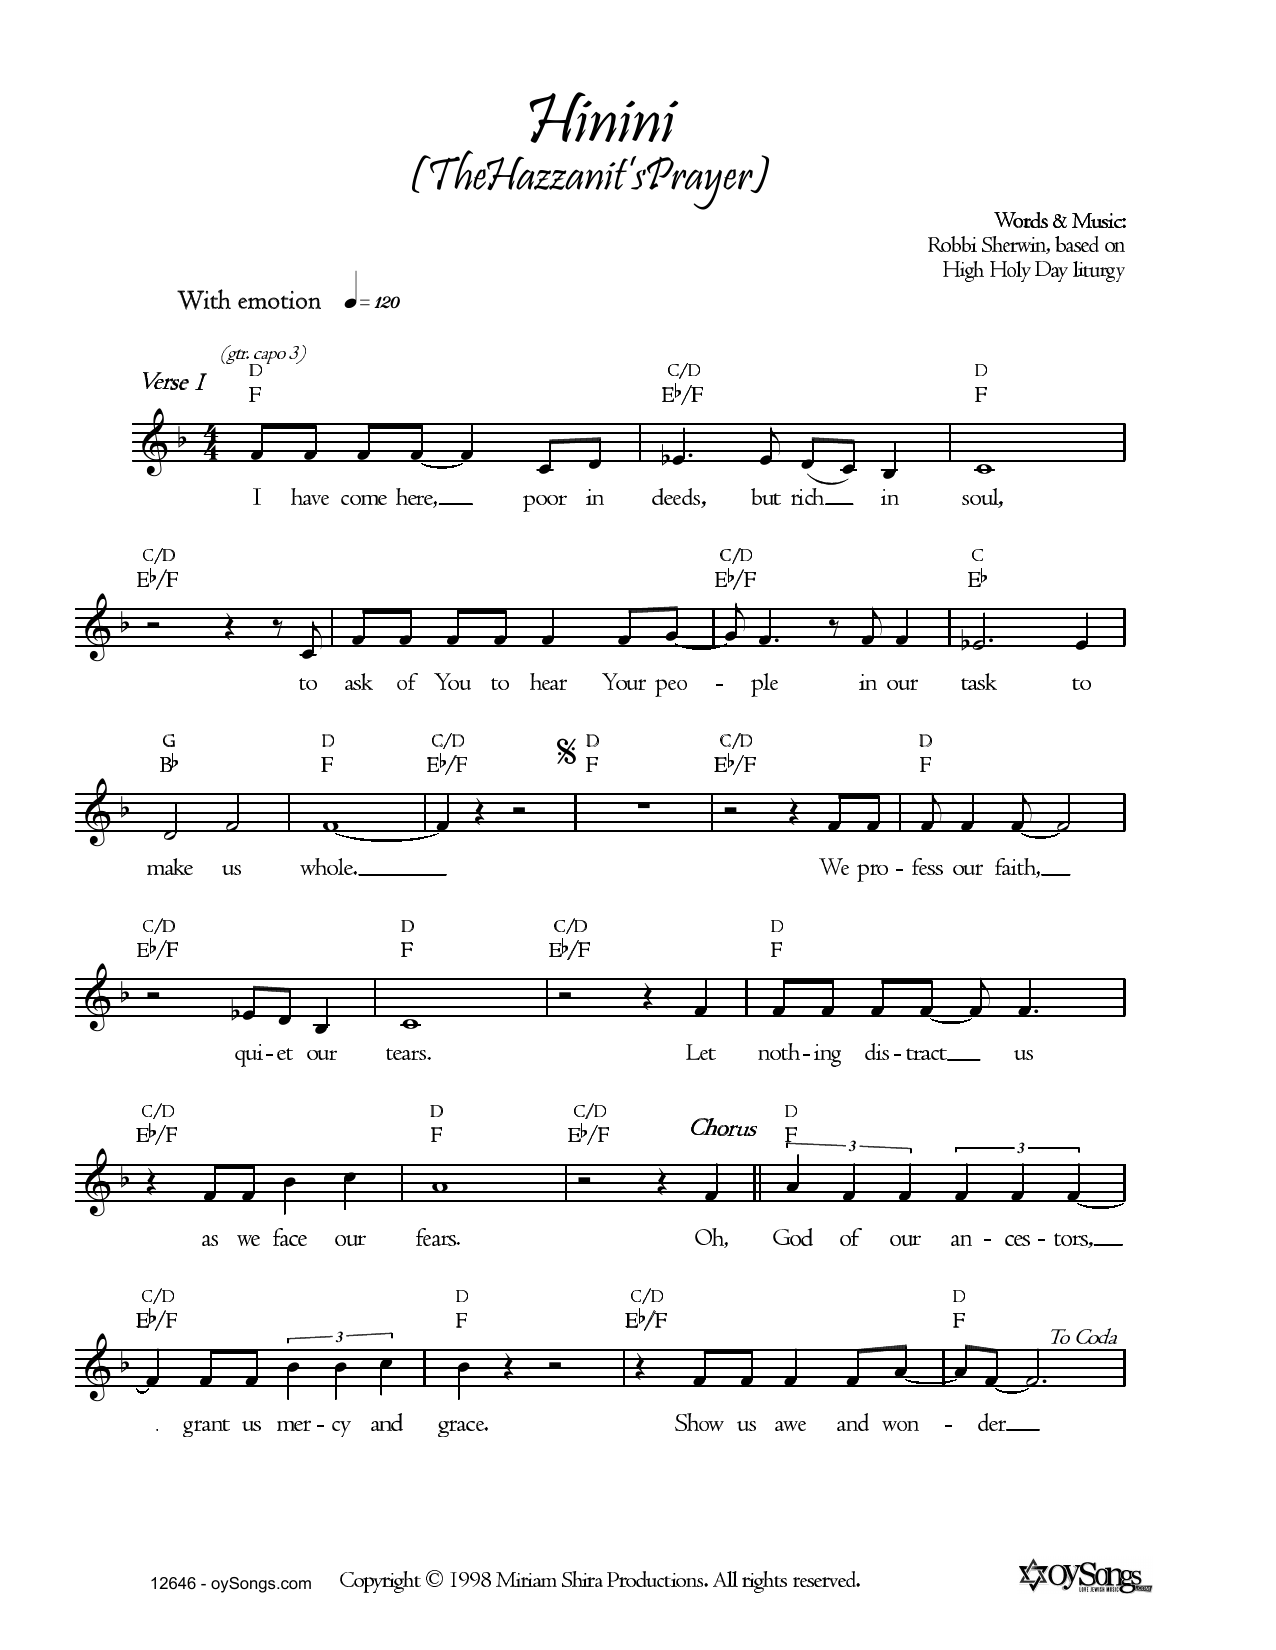 Robbi Sherwin Hinini (The Hazzanit's Prayer) Sheet Music Notes & Chords for Real Book – Melody, Lyrics & Chords - Download or Print PDF